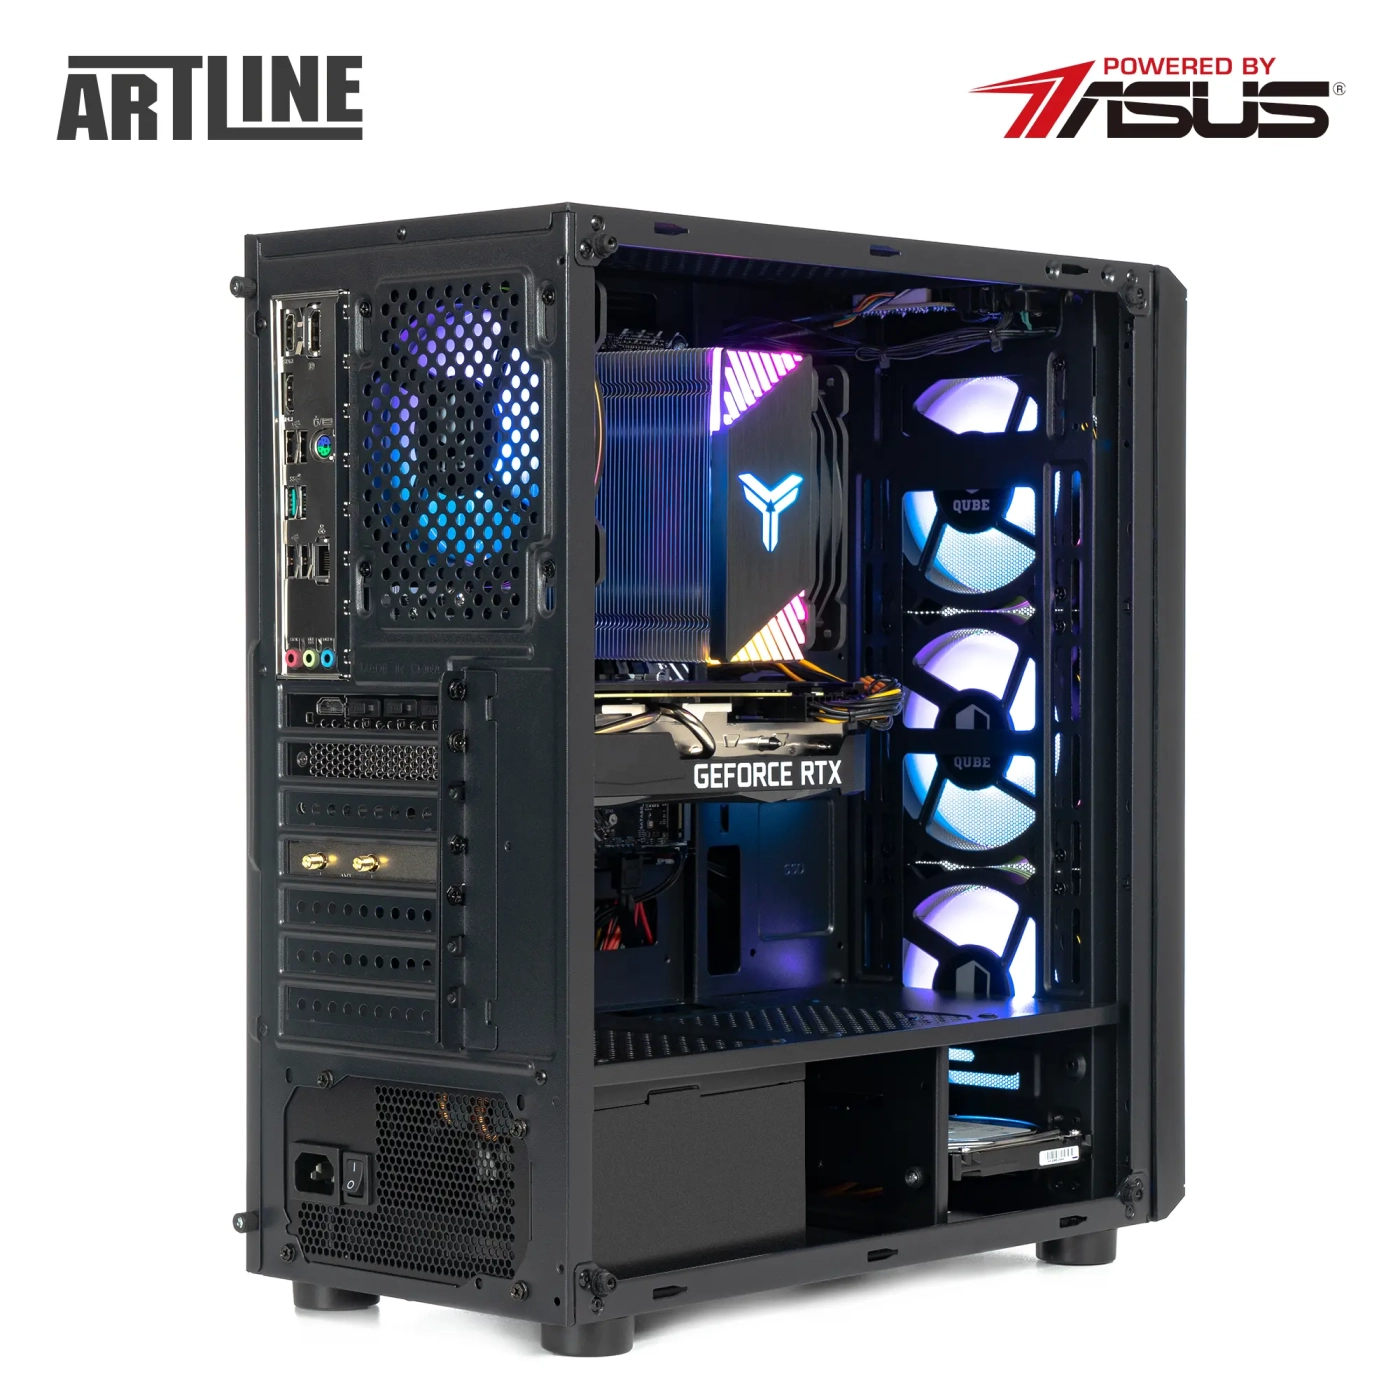 Купить Компьютер ARTLINE Gaming X57 (X57v67) - фото 11